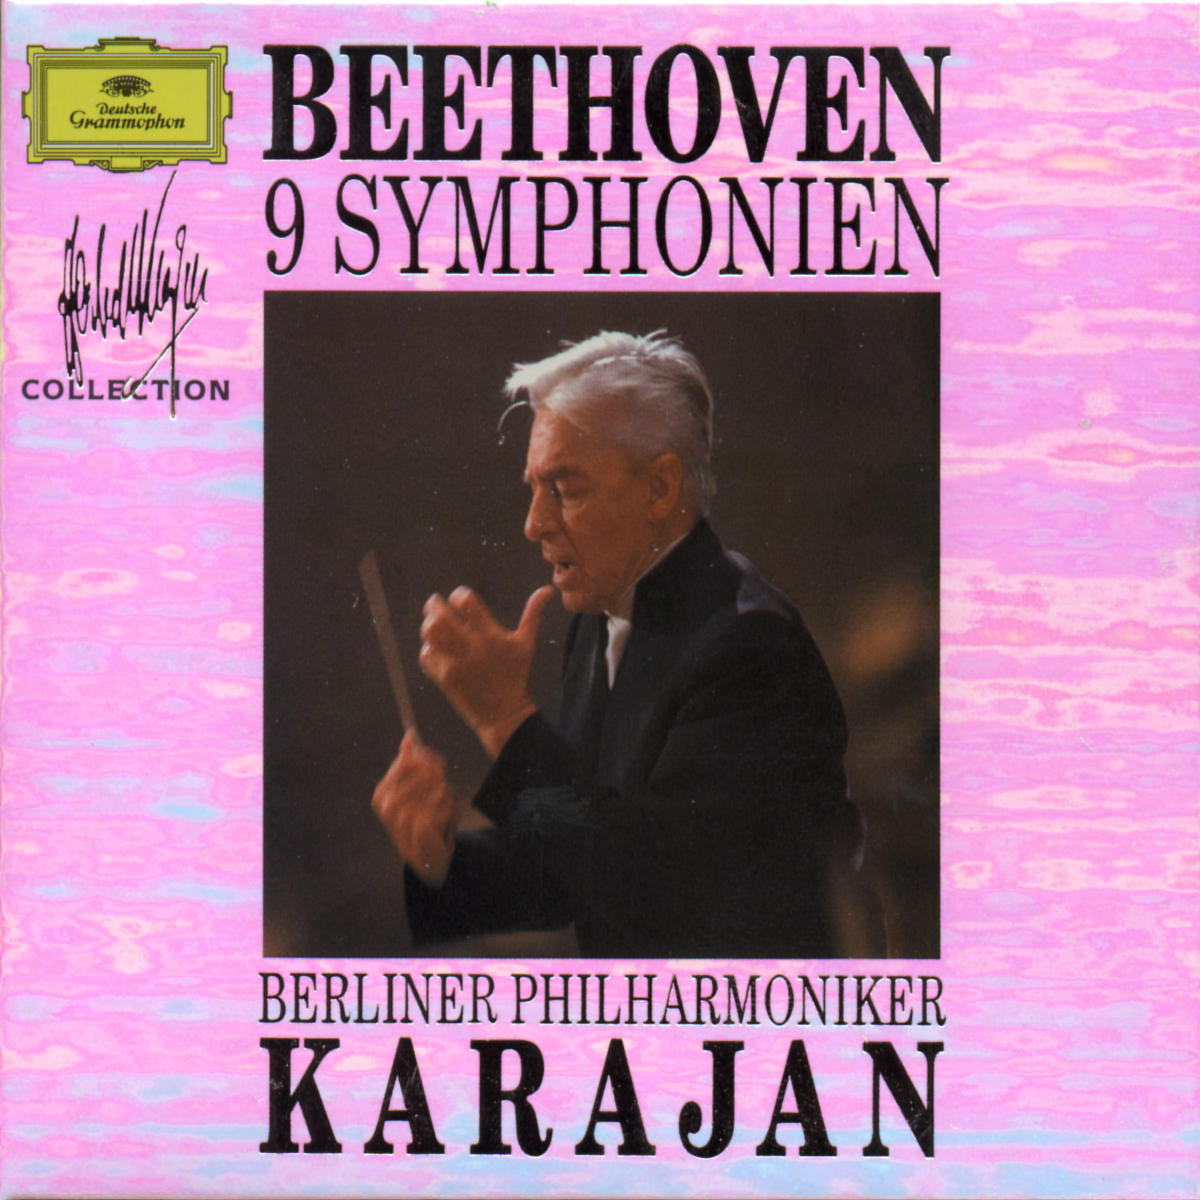 Product Family | BEETHOVEN 9 Symphonien Karajan 1975-1977